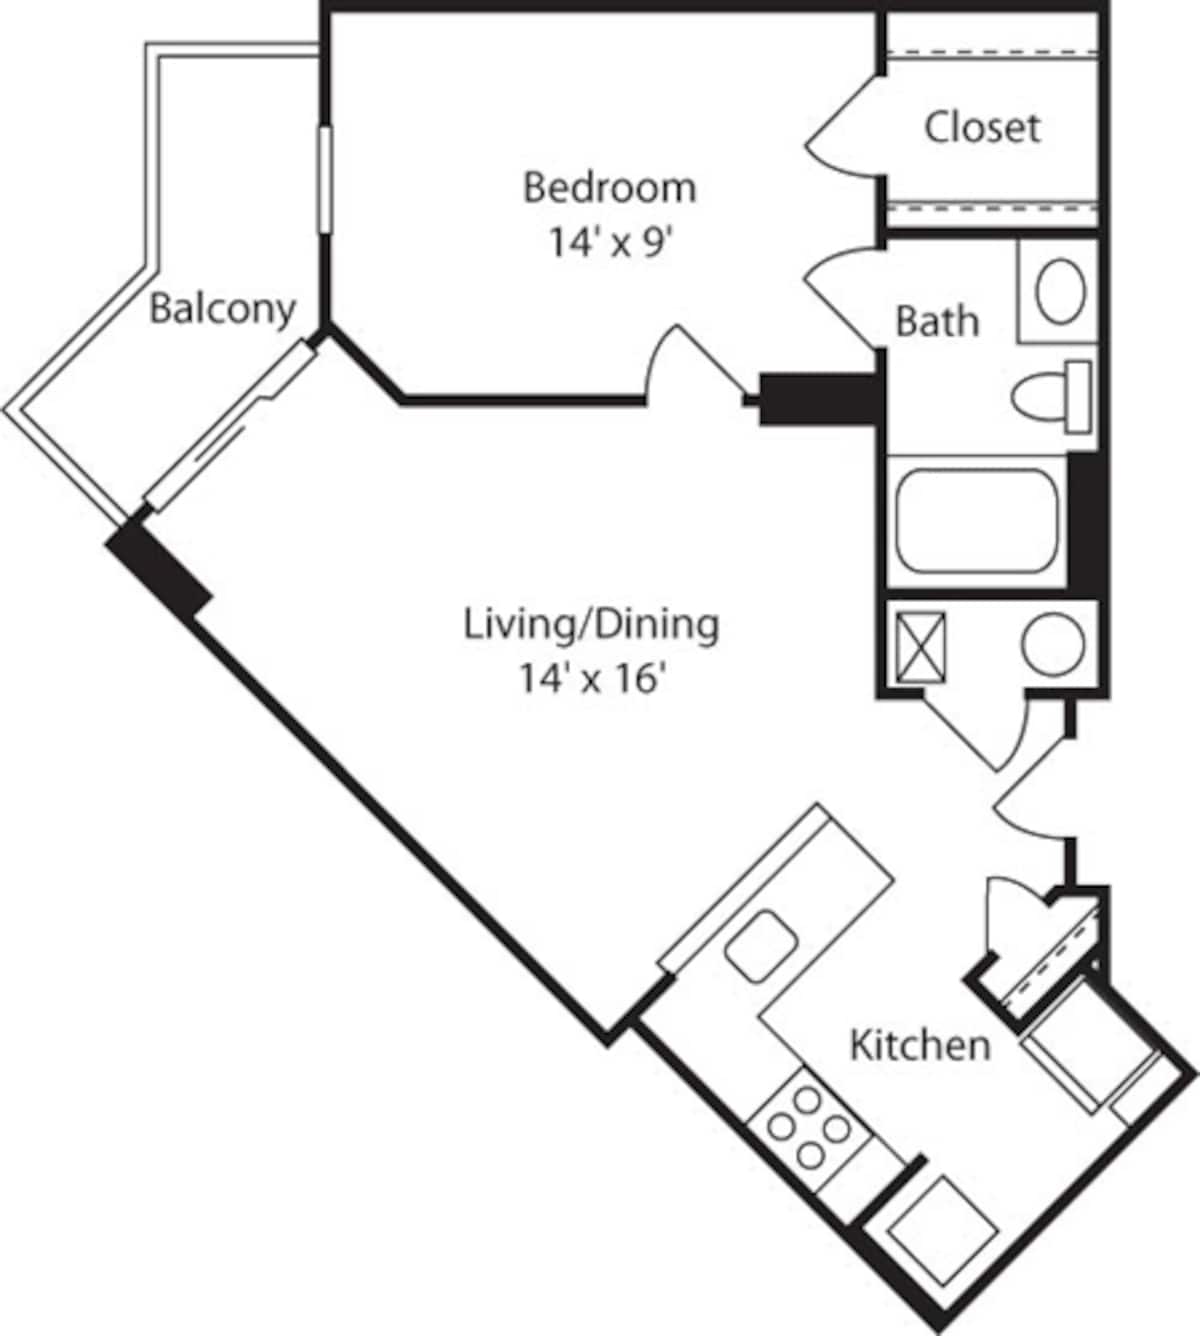 Floorplan diagram for B1, showing 1 bedroom